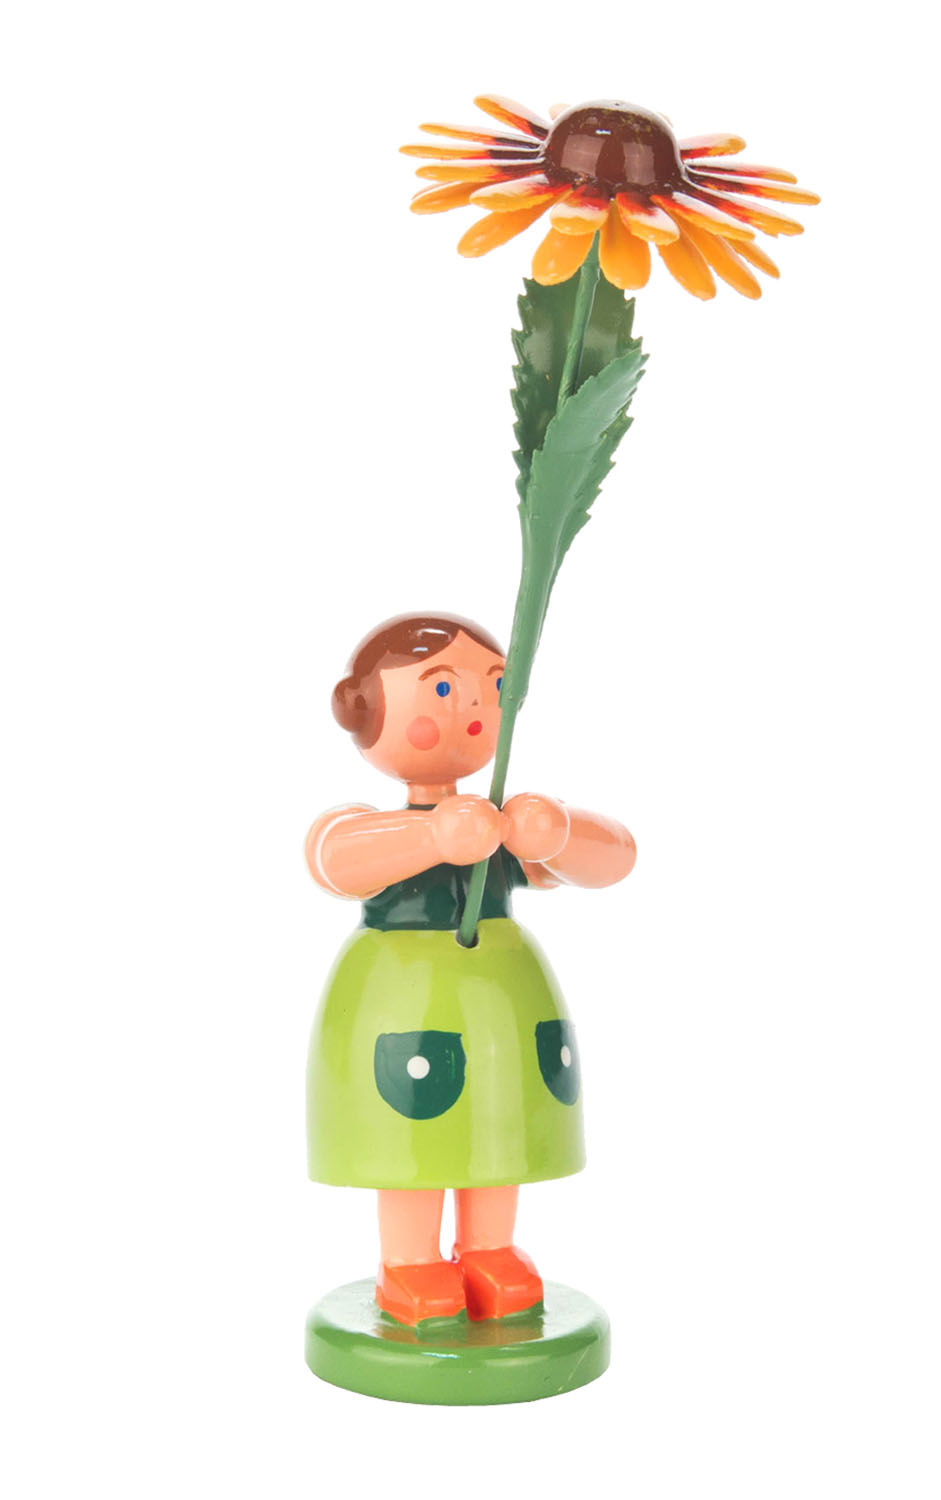 Dregeno Easter Ornament - Green Flower Girl - 4.5"H x 1.25"W x 1.25"D